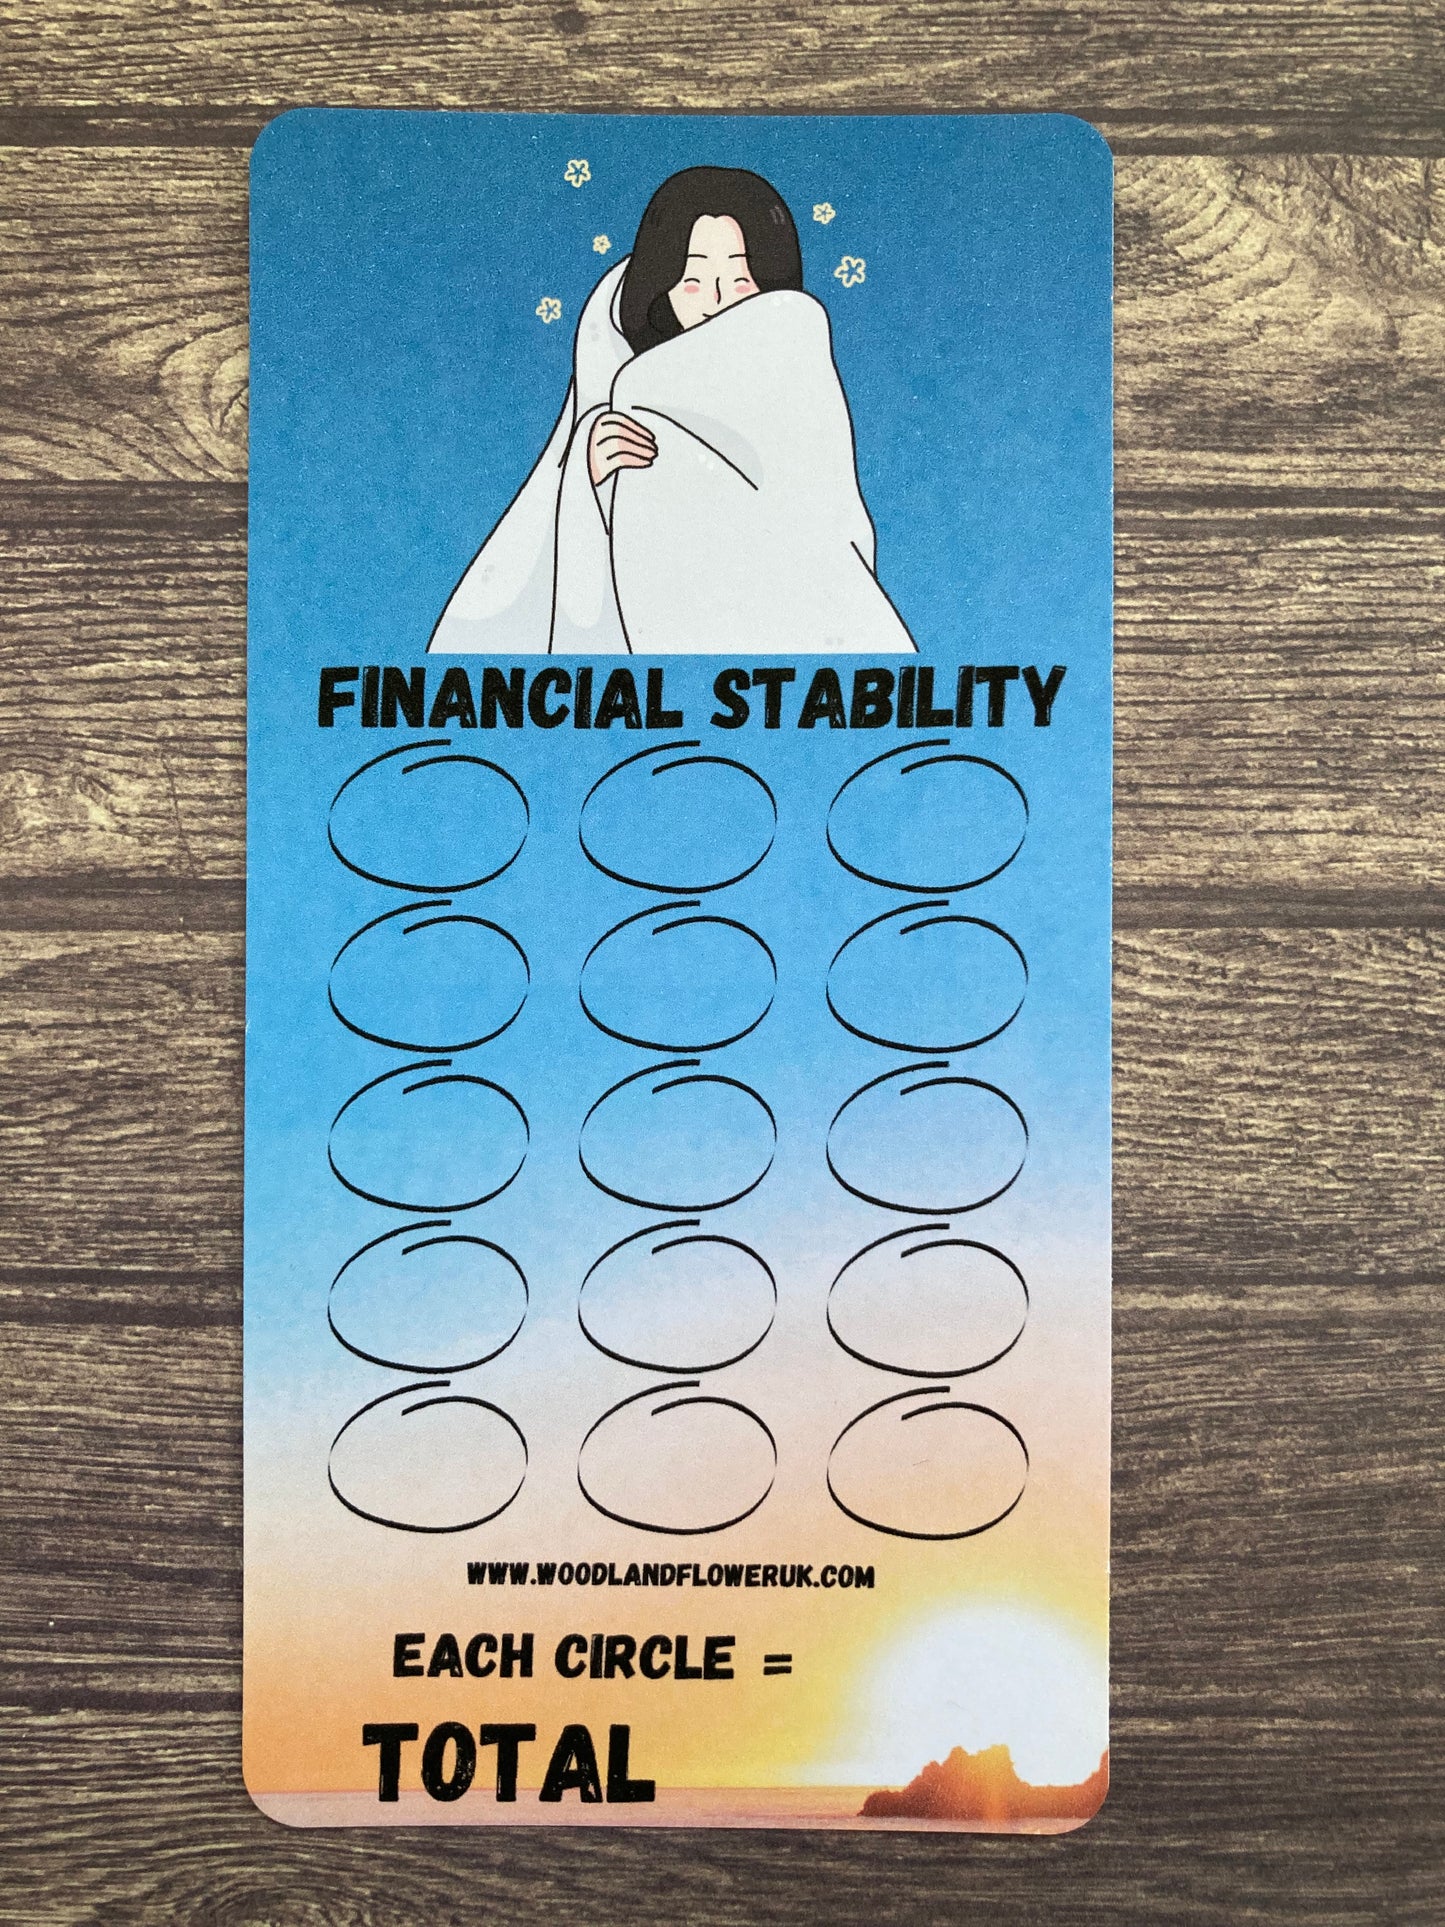 Saving challenge “financial stability”